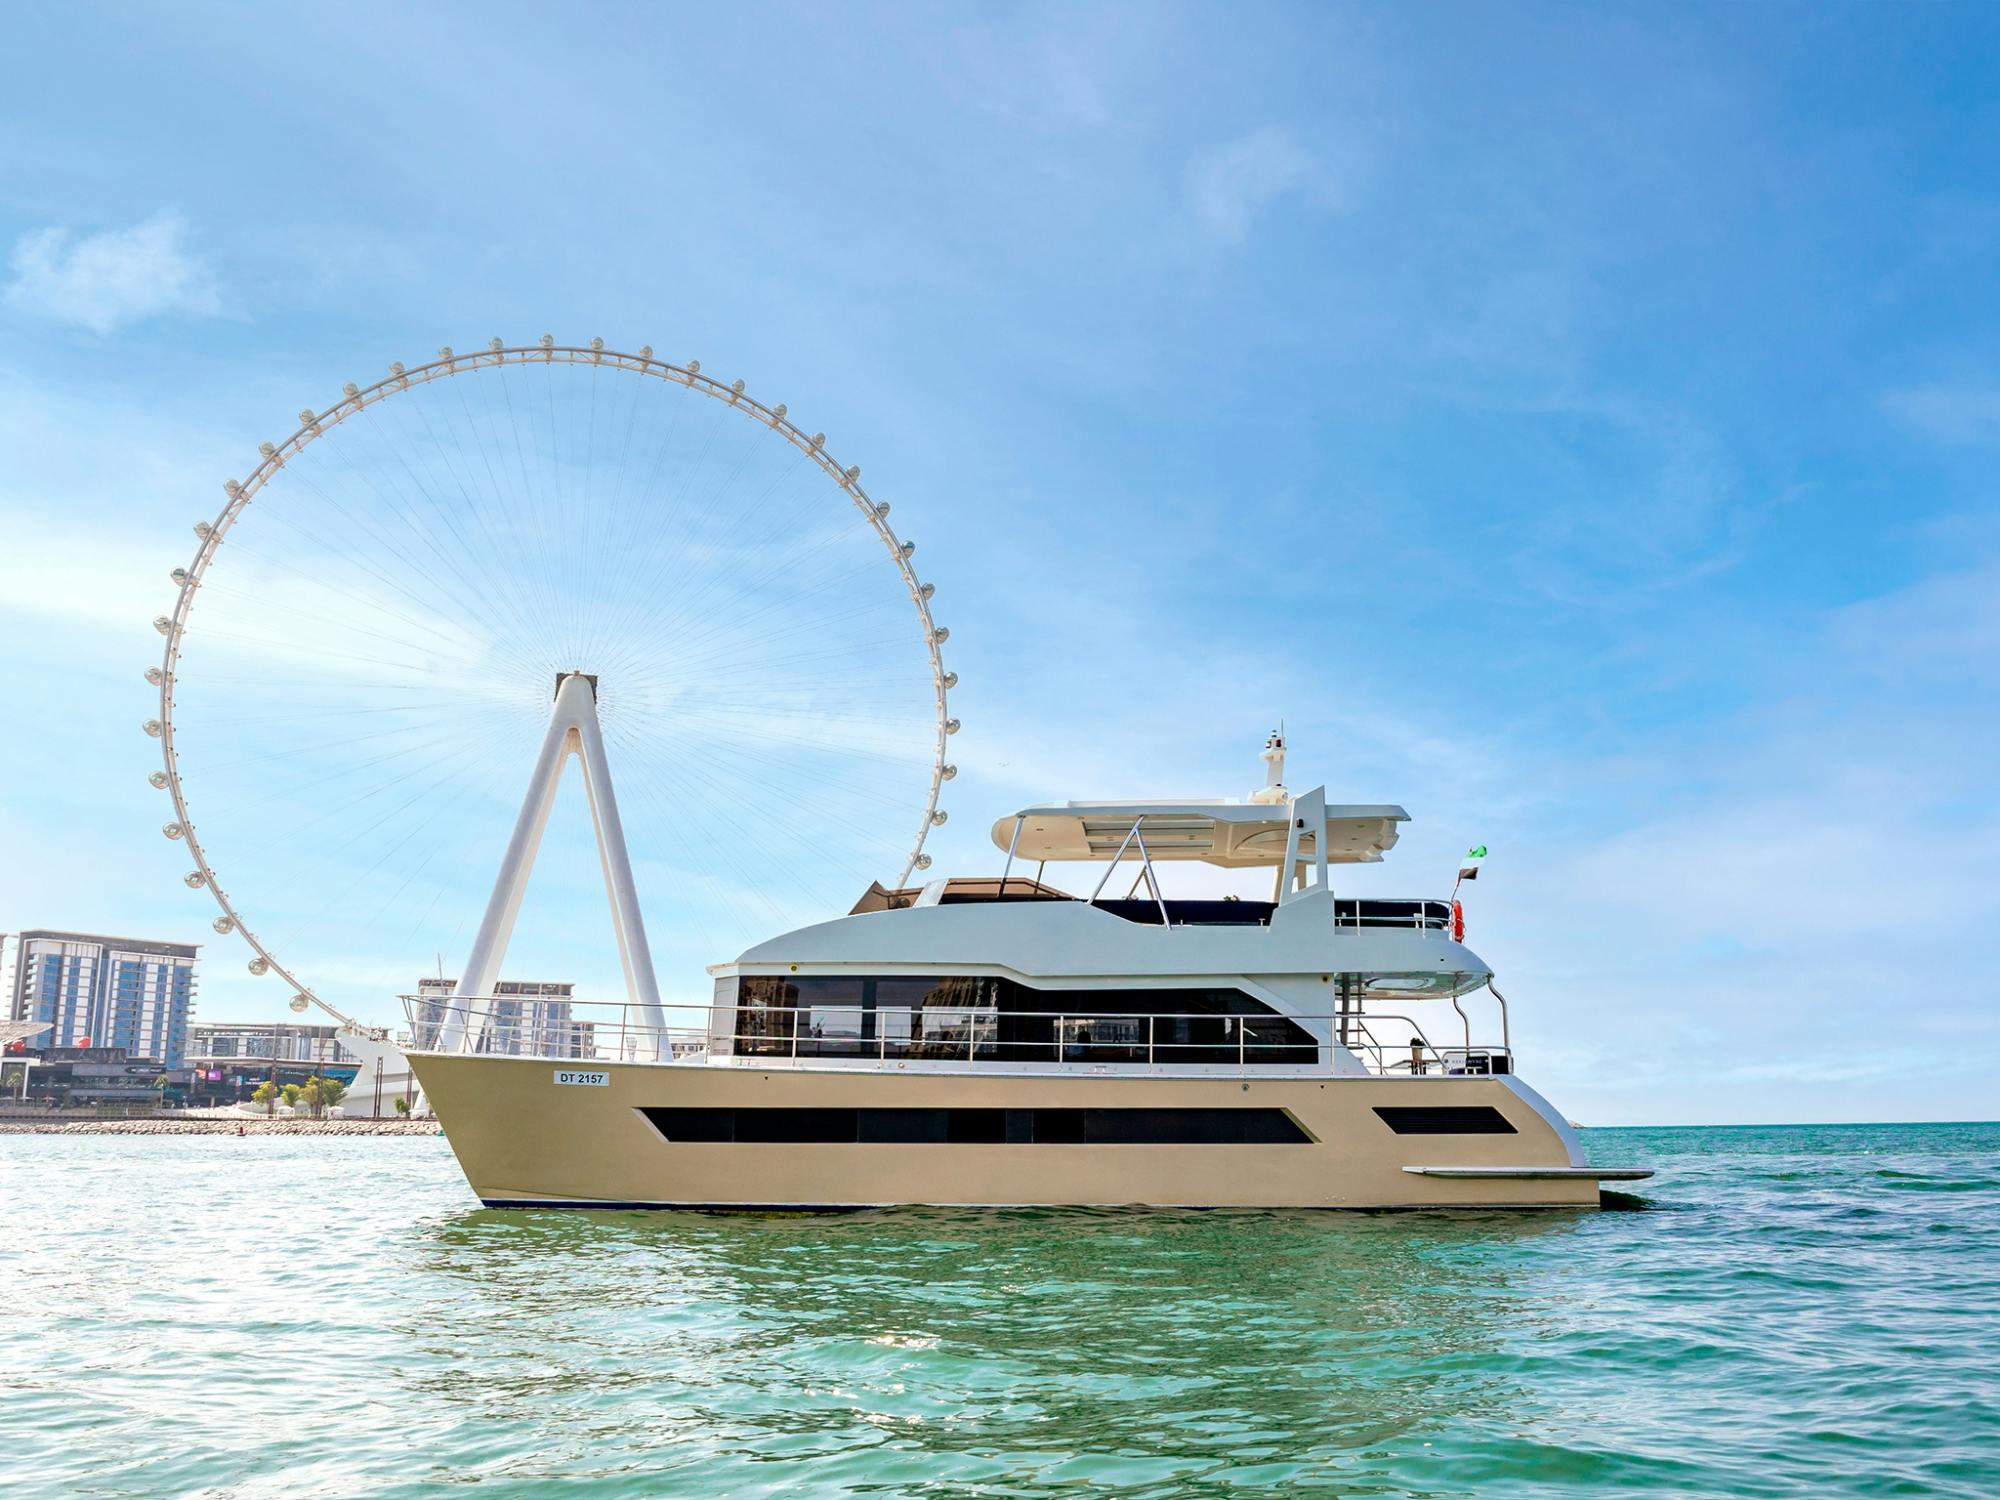 Dubai luxury yacht experience with extended Burj tour